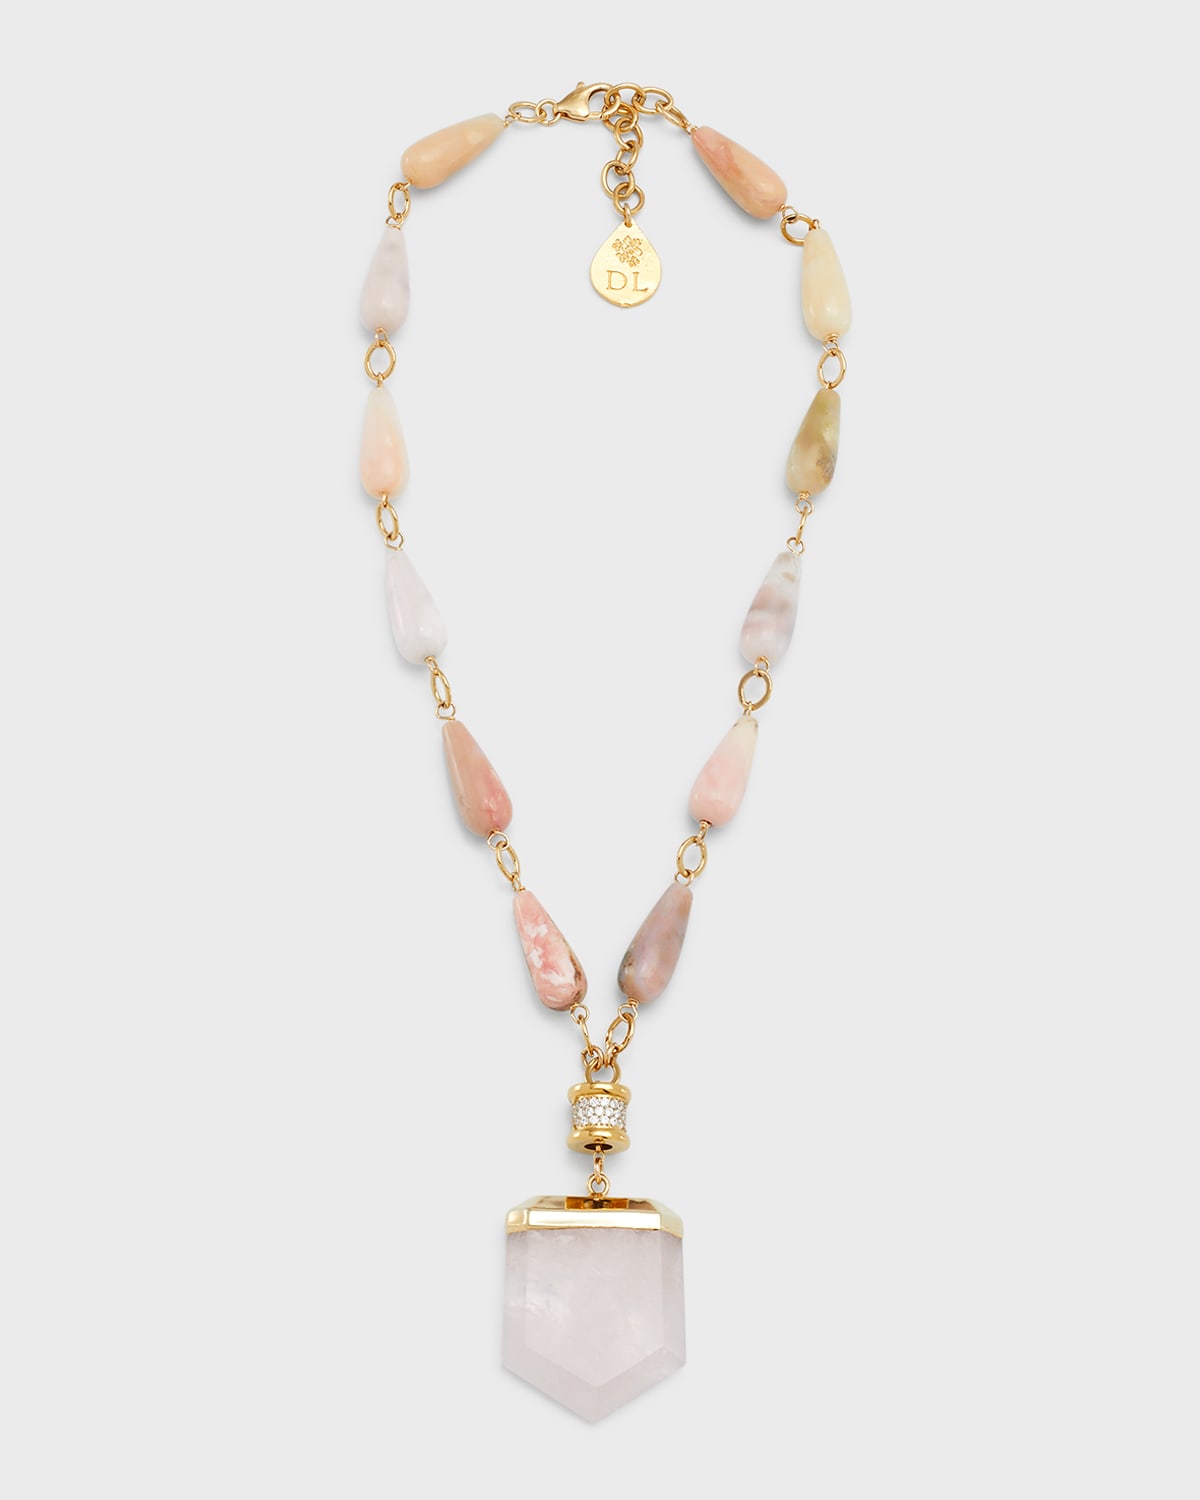 Devon Leigh Pink Opal And Rose Quartz Pendant Necklace